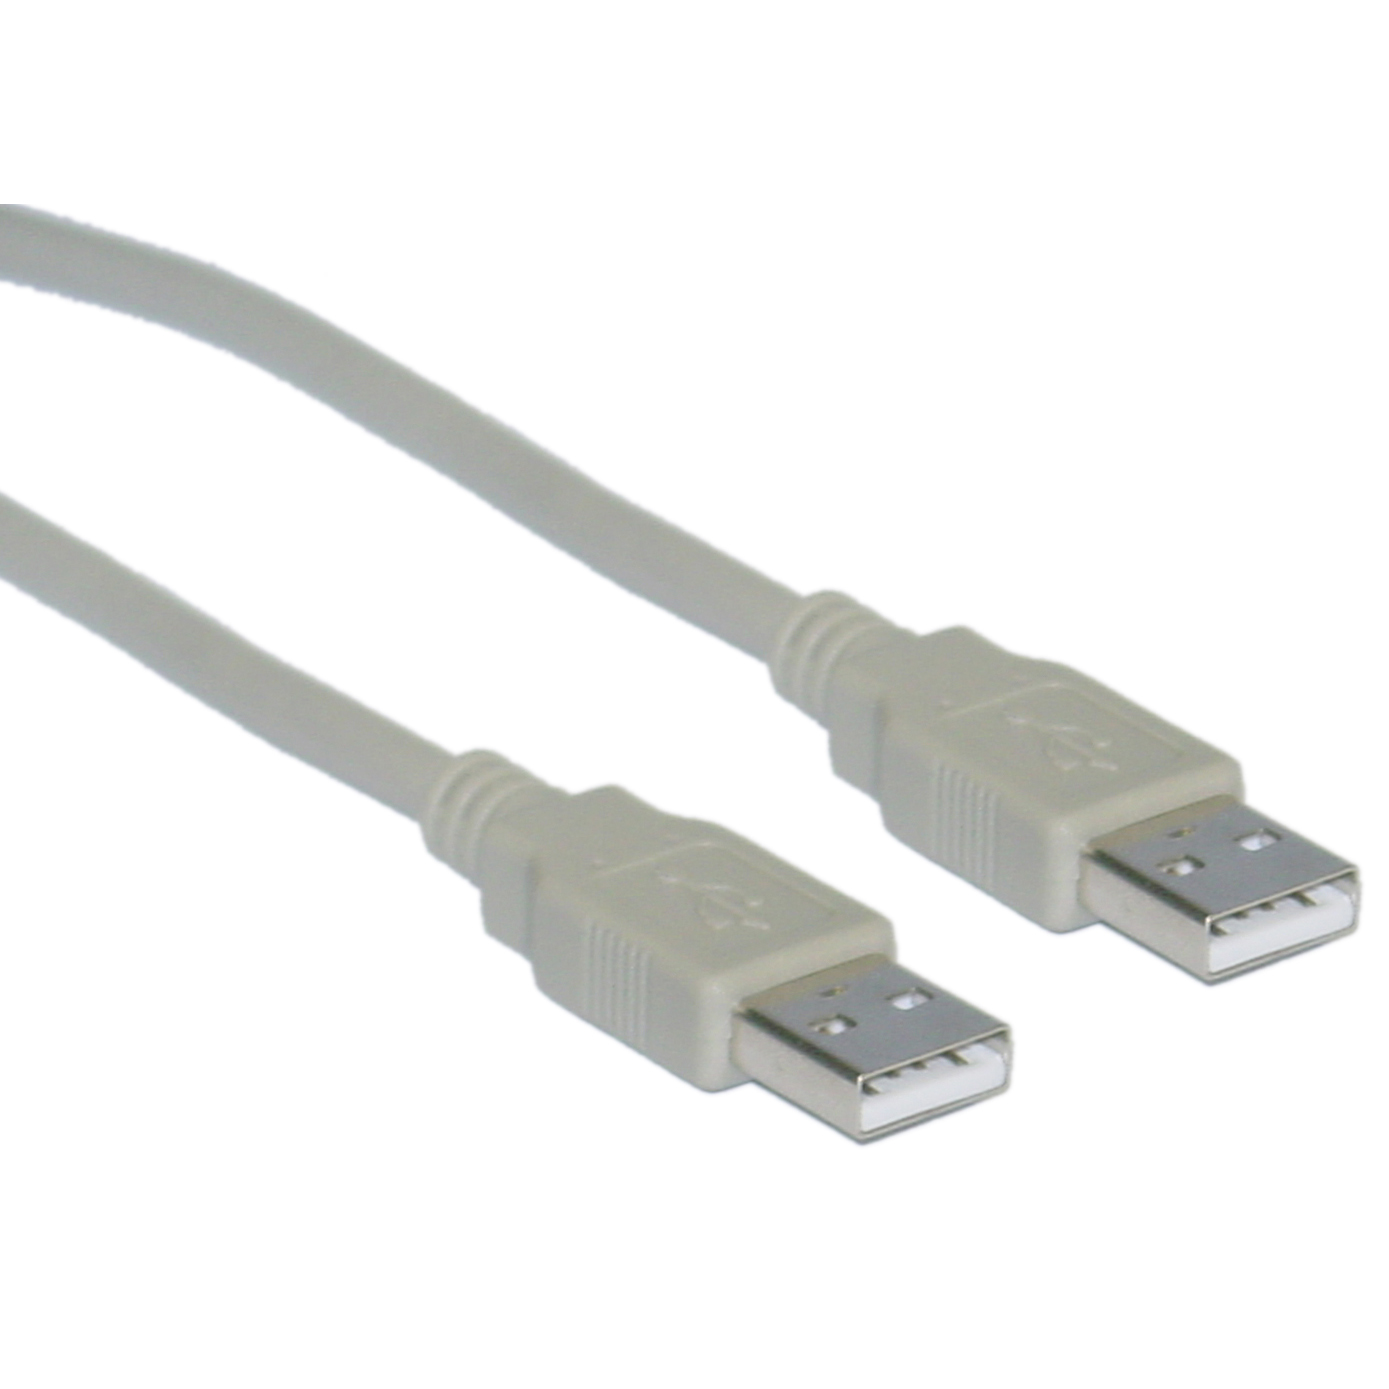 Converge tidevand kaste støv i øjnene USB 2.0 A Male to A Male Cable Pinout - 6 ft.